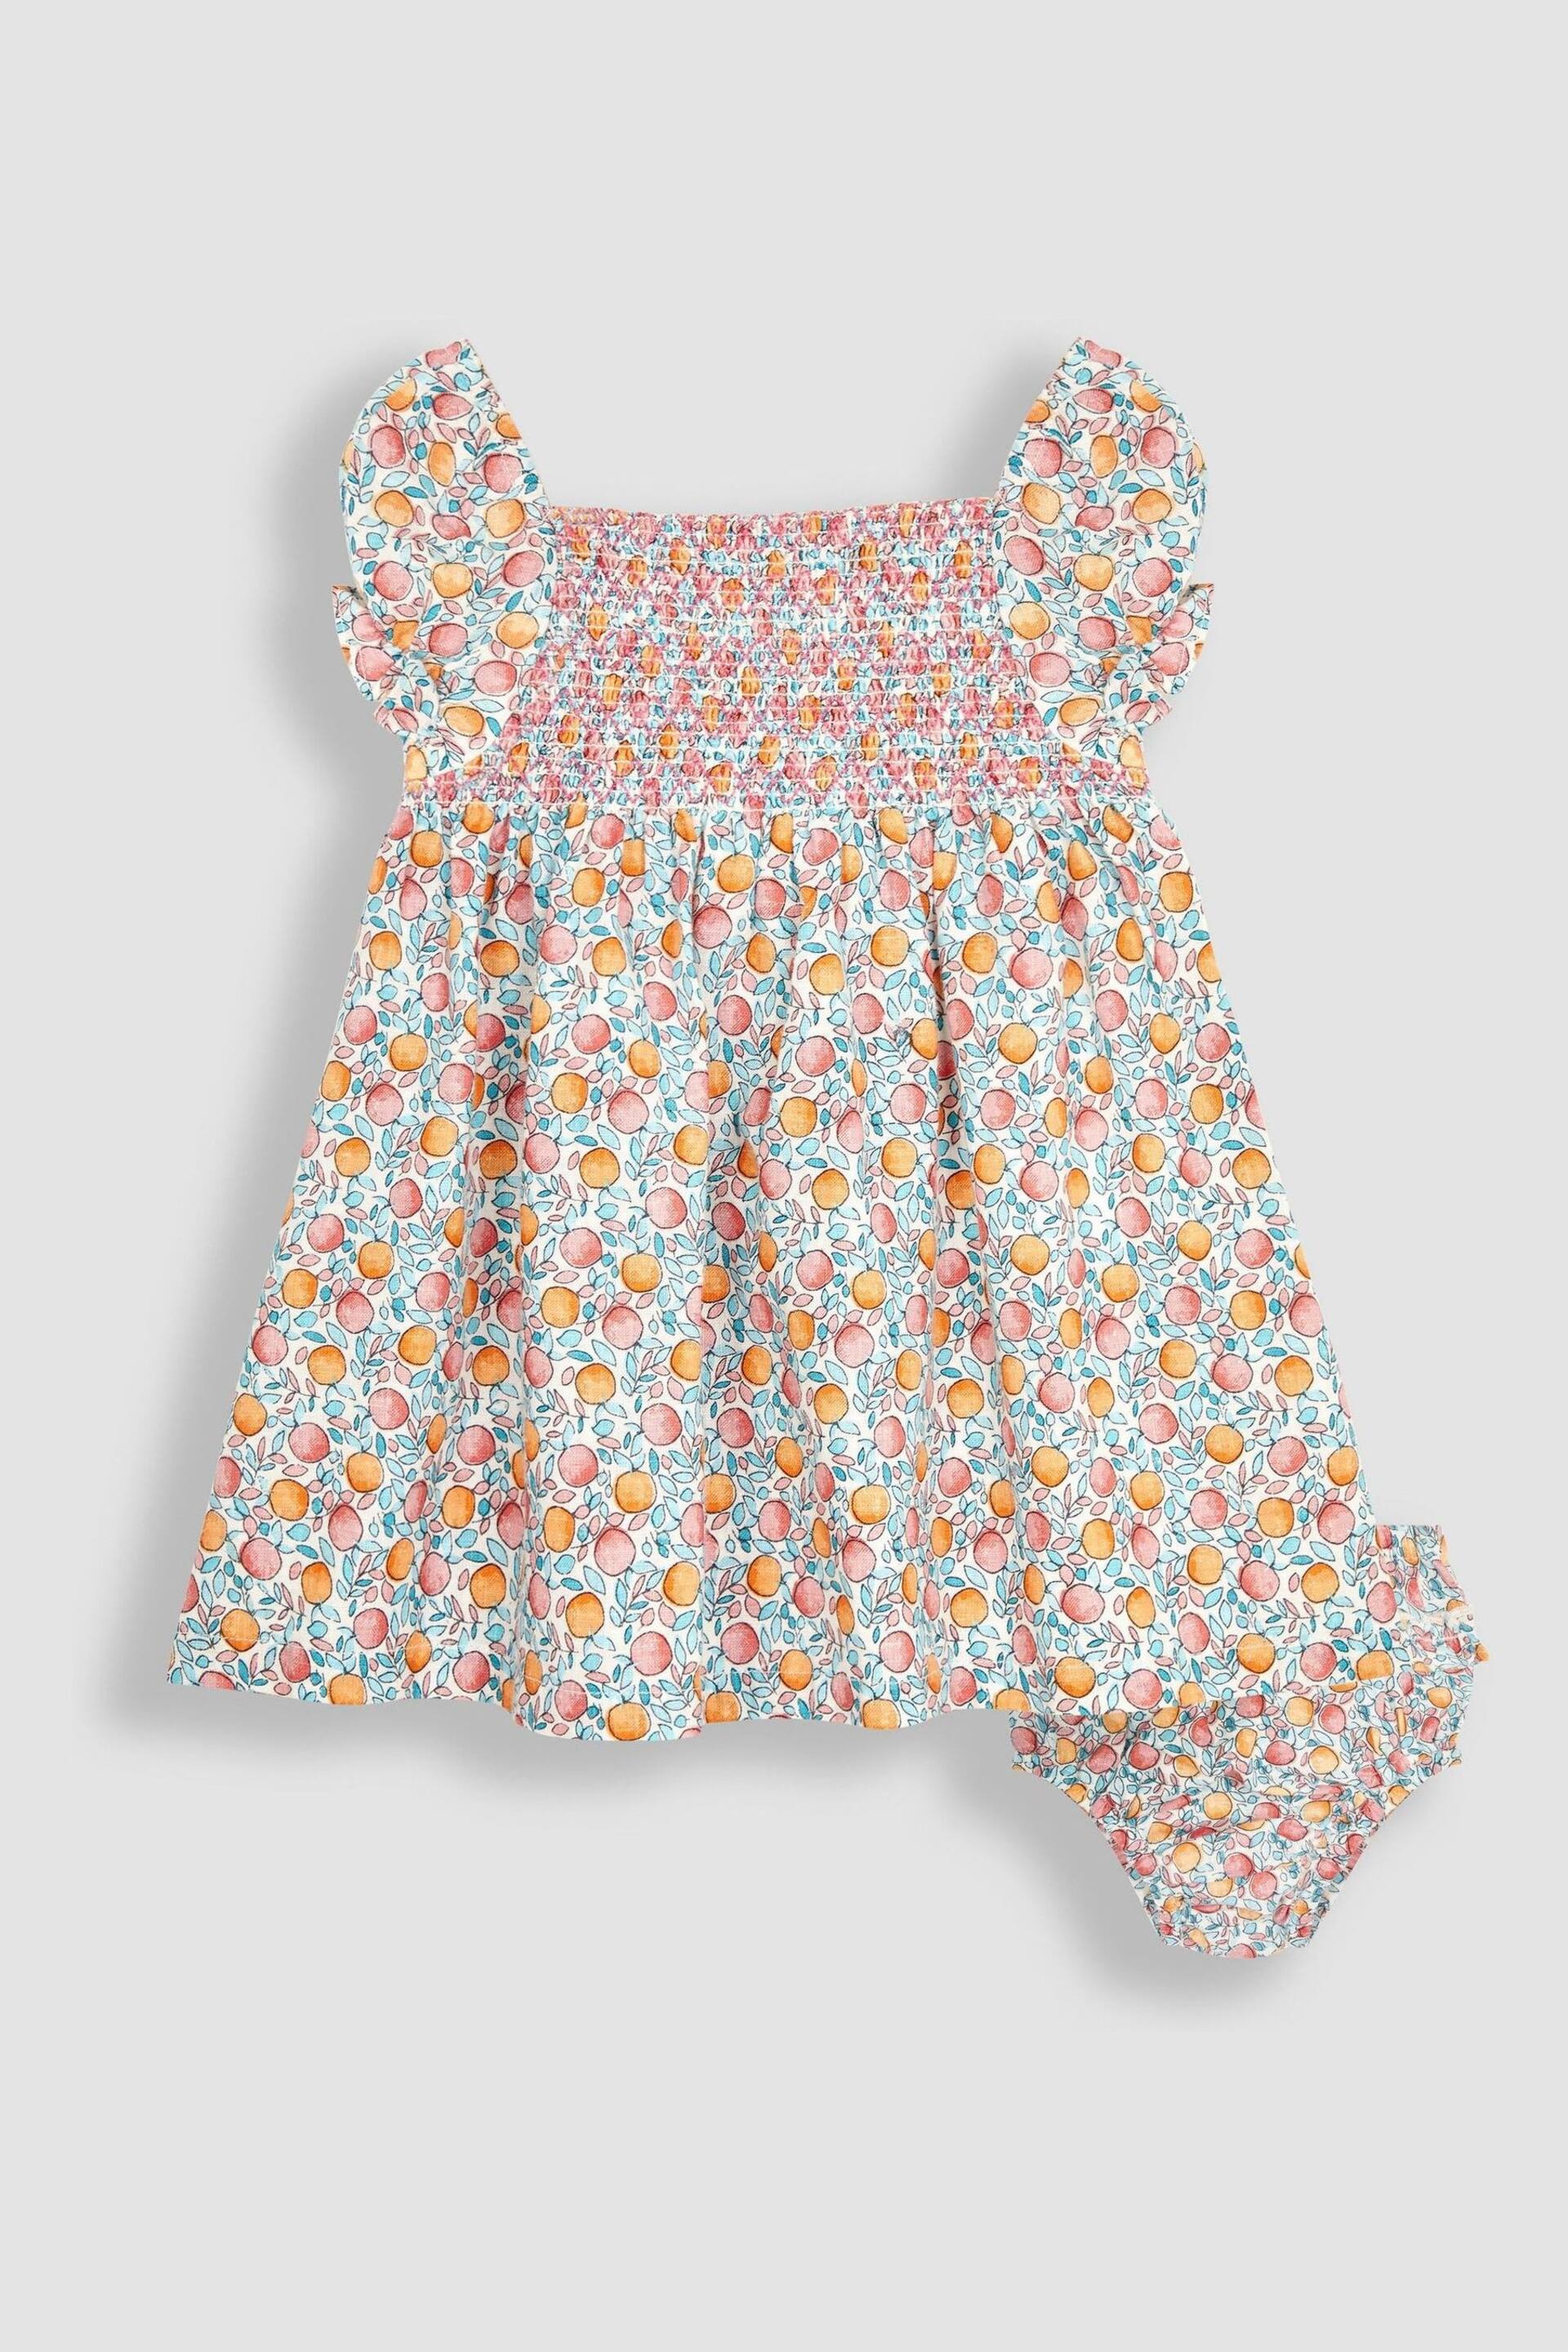 JoJo Maman Bébé Cream Apple & Peach Cotton Linen Smocked Baby Dress With Knickers - Image 1 of 4